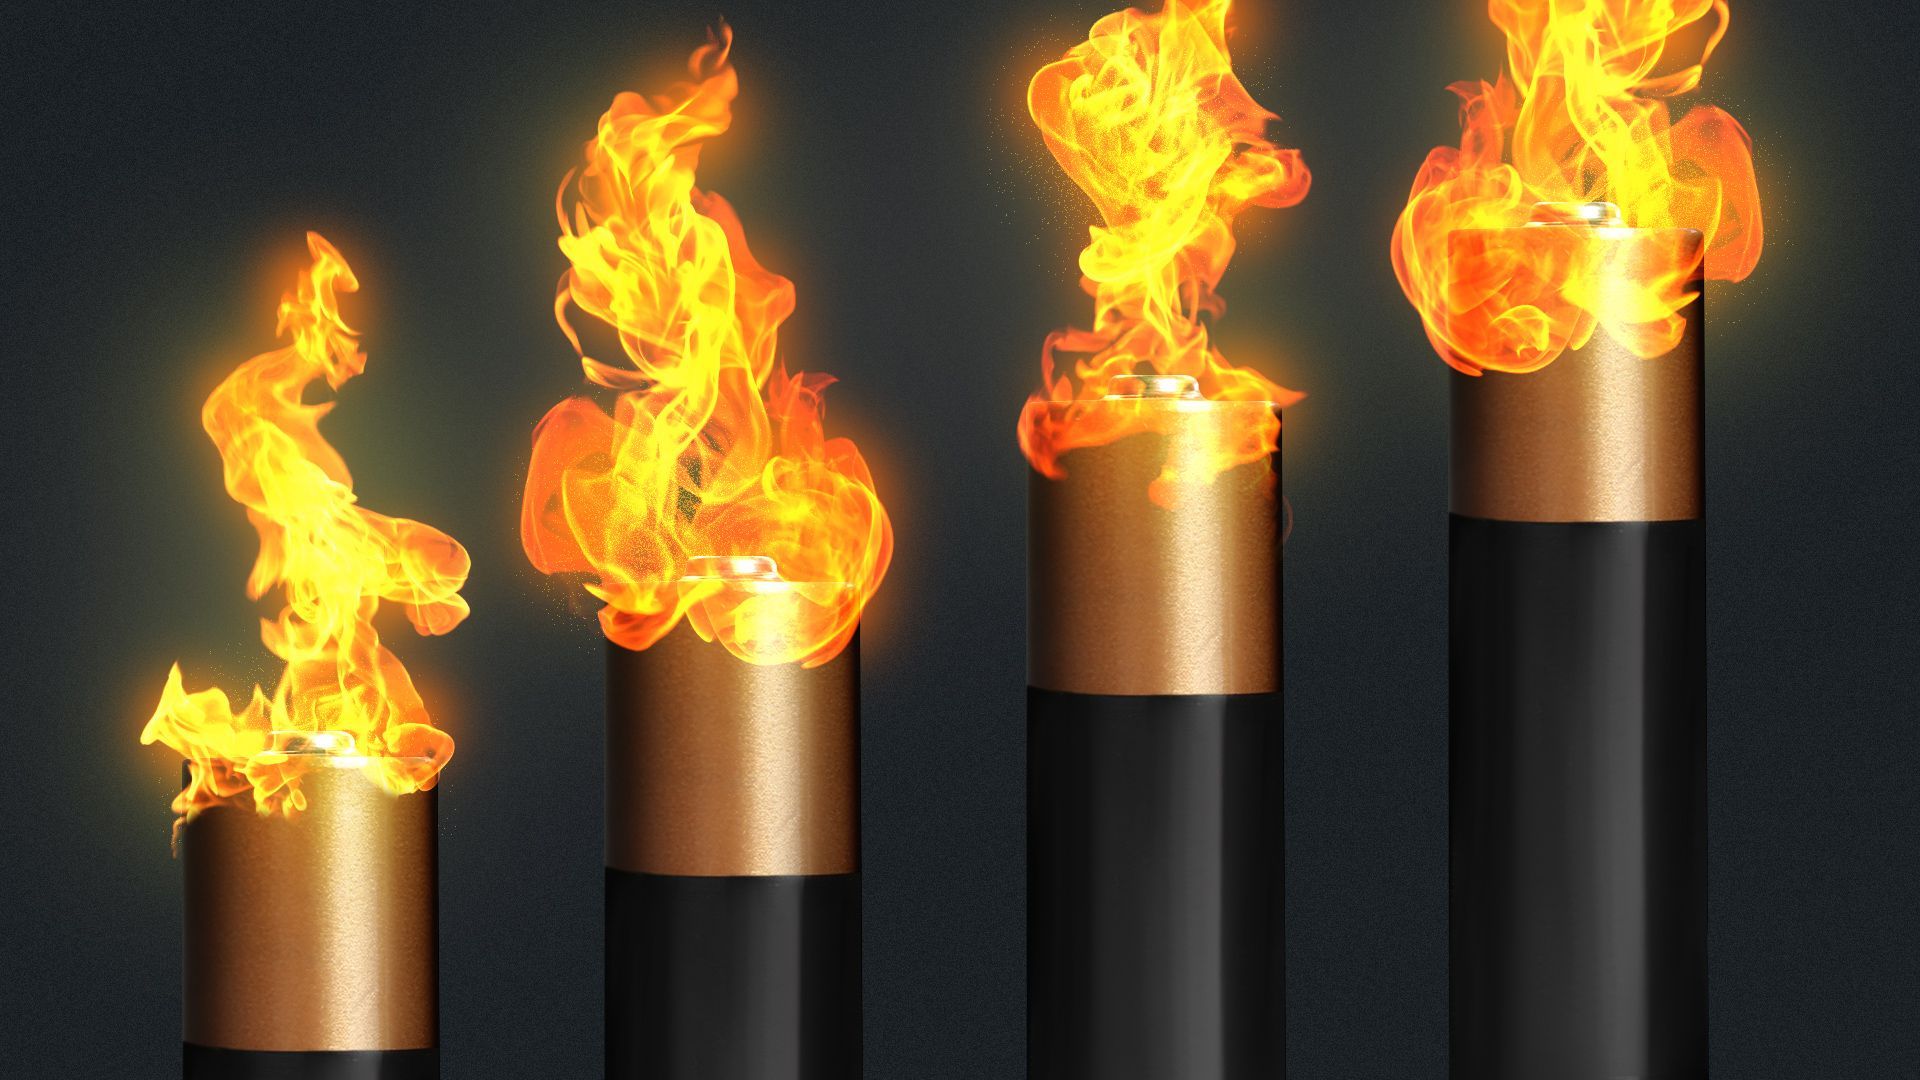 Illustration of a series of batteries on fire creating an upward bar chart. 